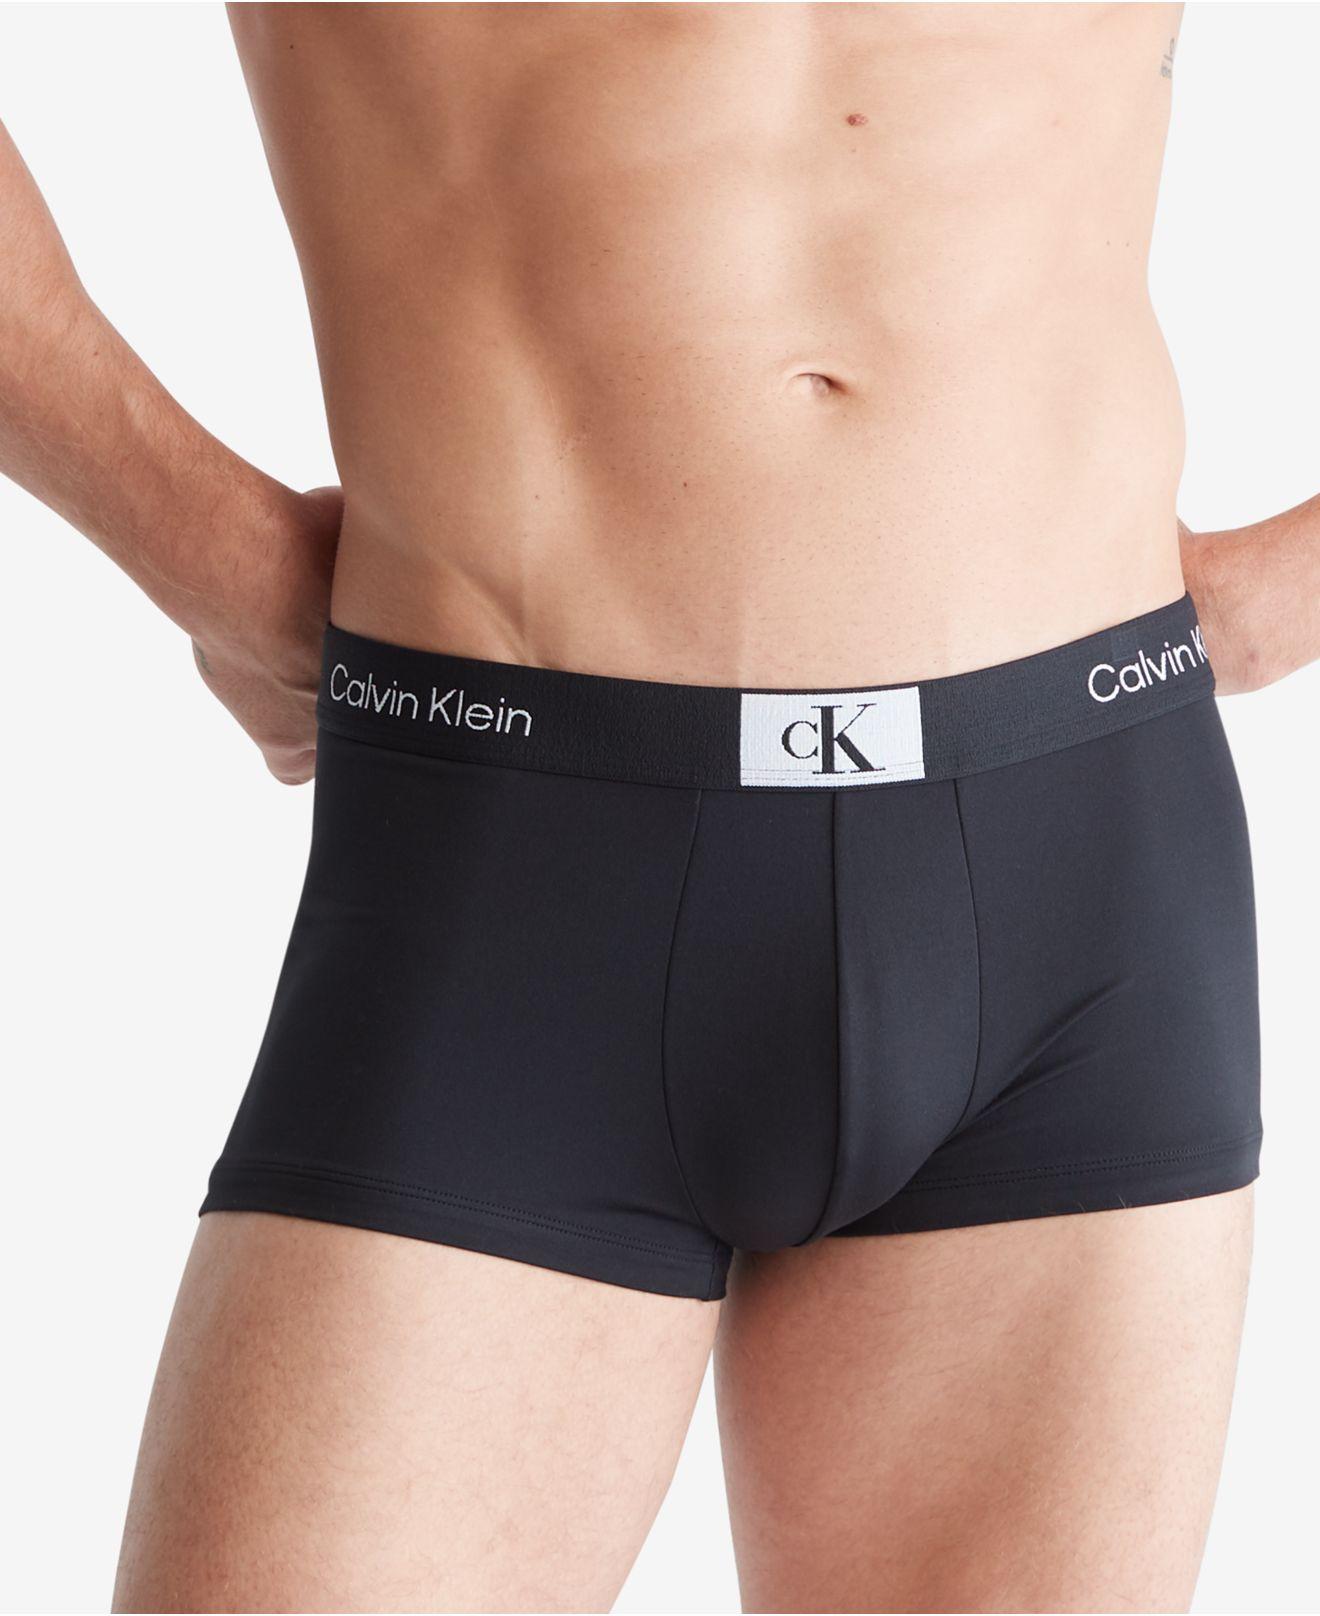 Calvin Klein 1996 Micro Low Rise Trunks Underwear in Black for Men